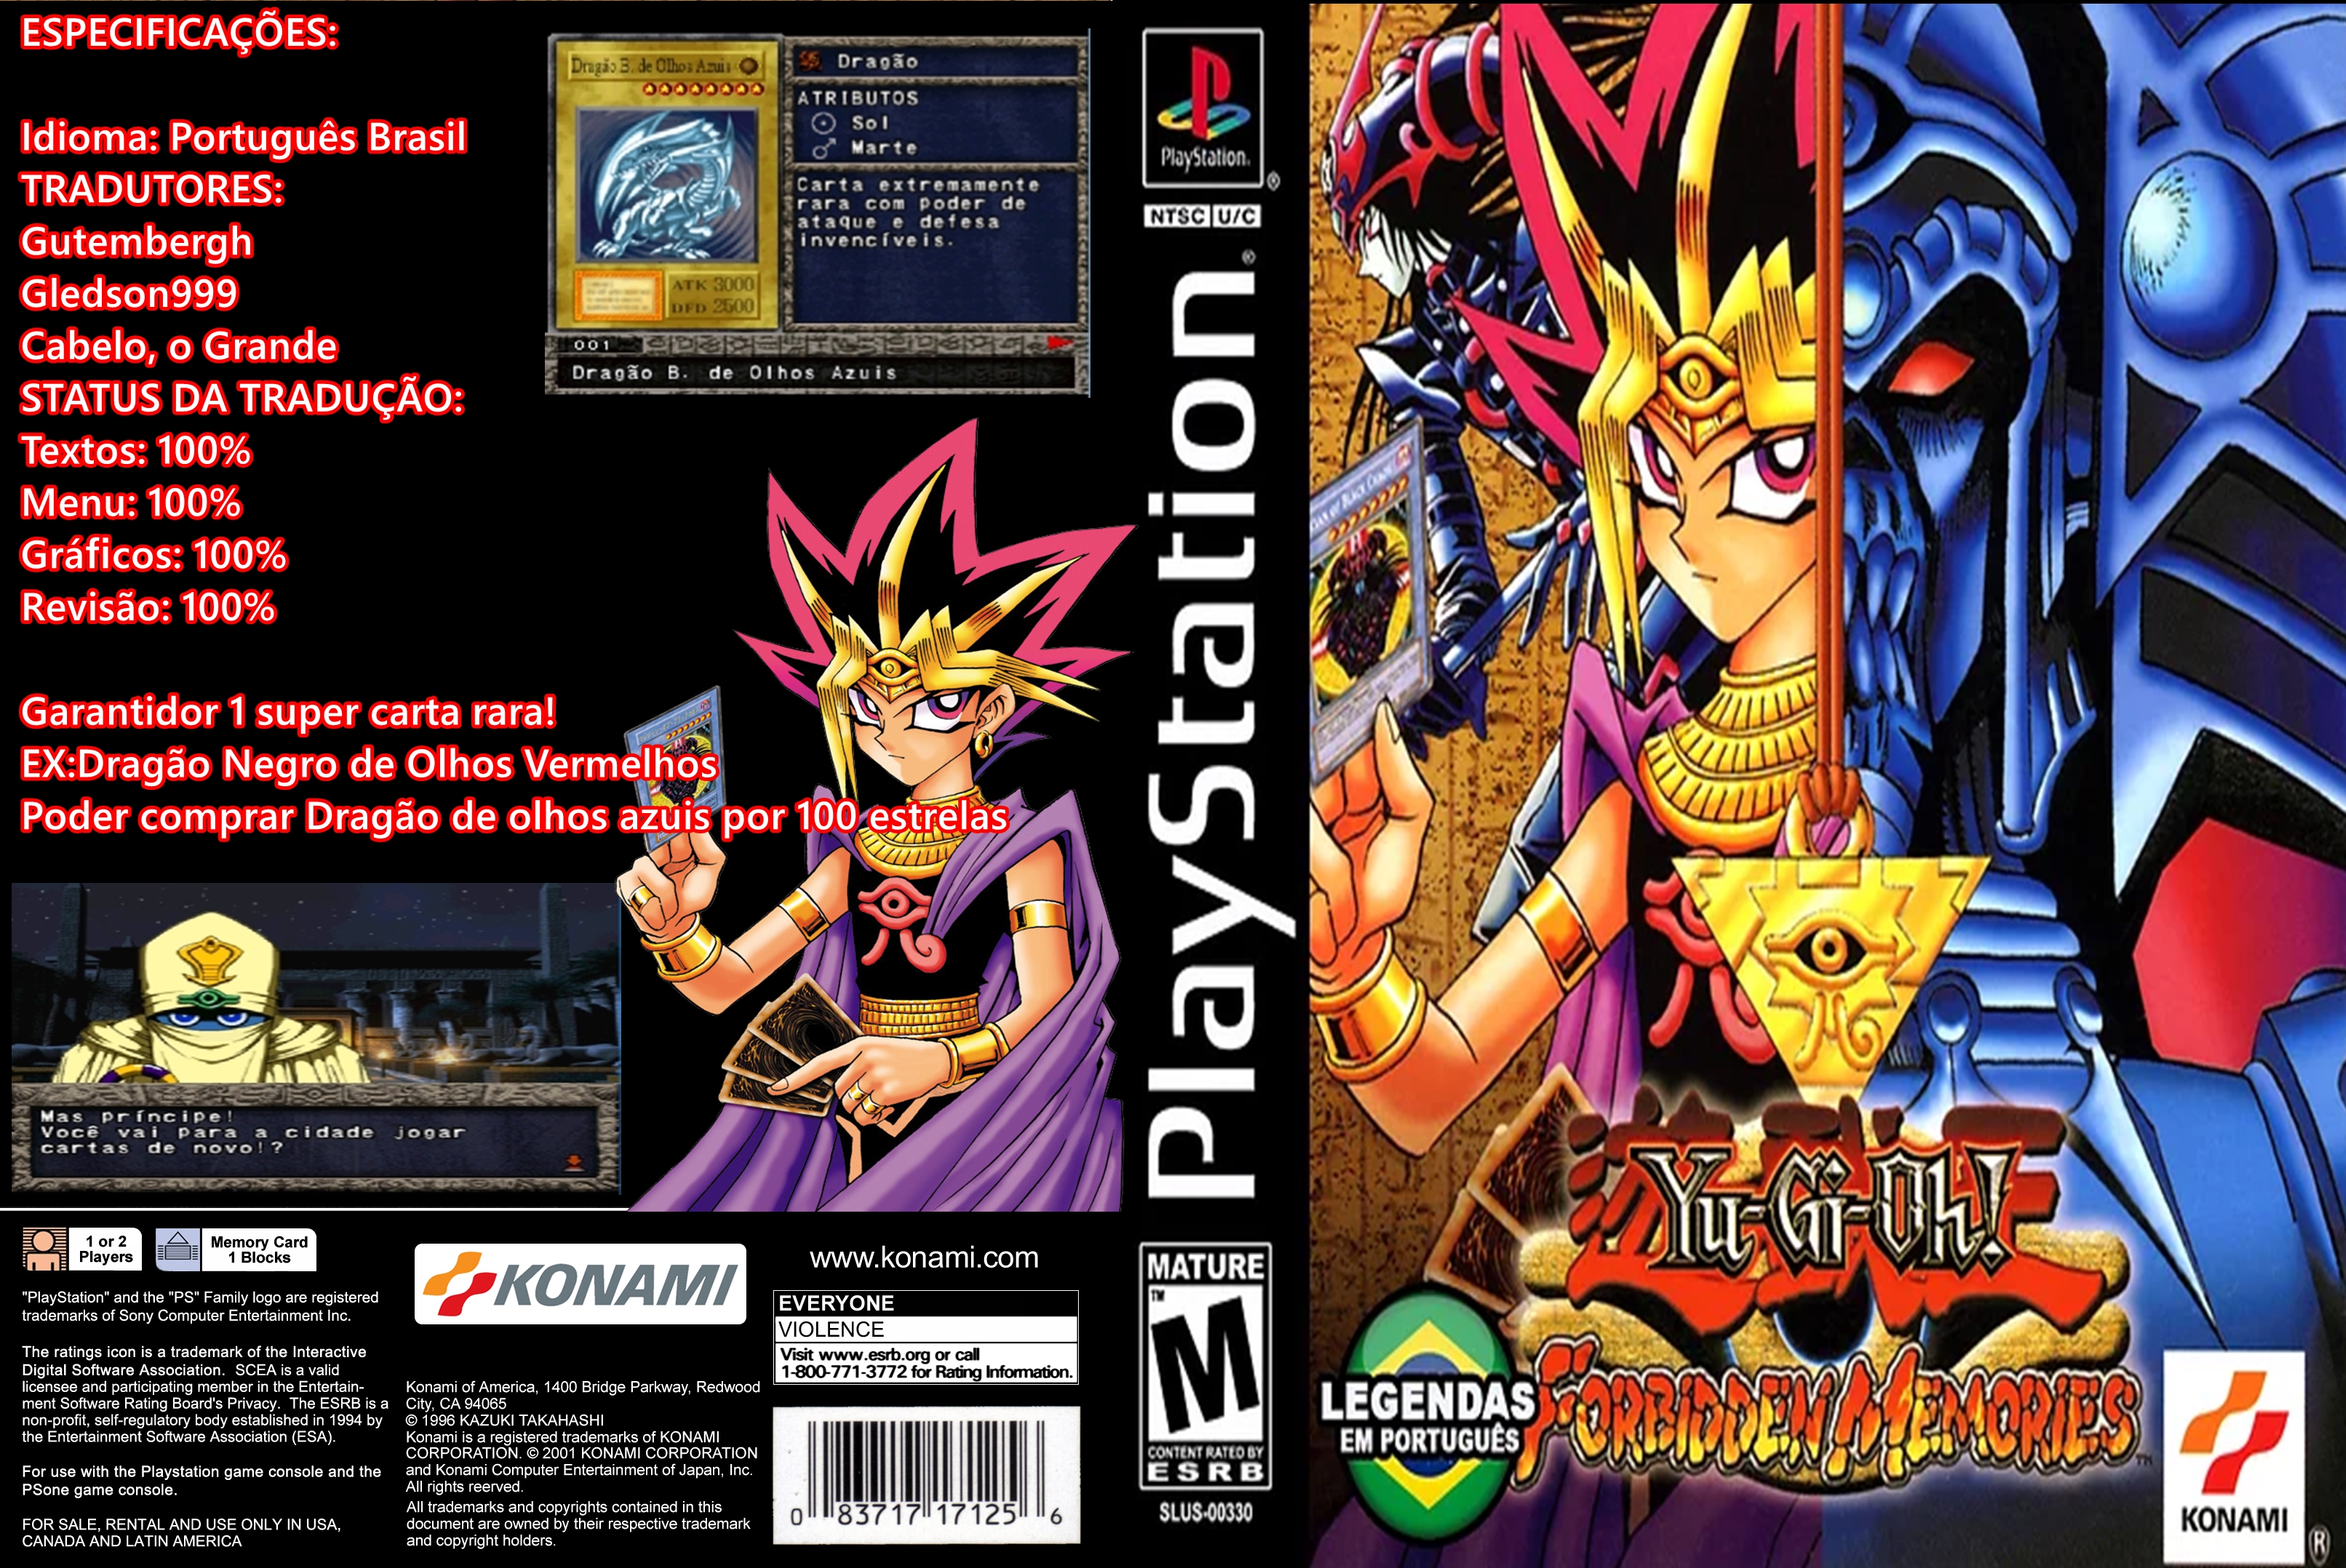 Baixar Yu-Gi-Oh! Out of Darkness Final! Mod USA PS1 O mod Out of  Darkness, do Yu-Gi-Oh! Forbidden Memories, que tem a caracterís